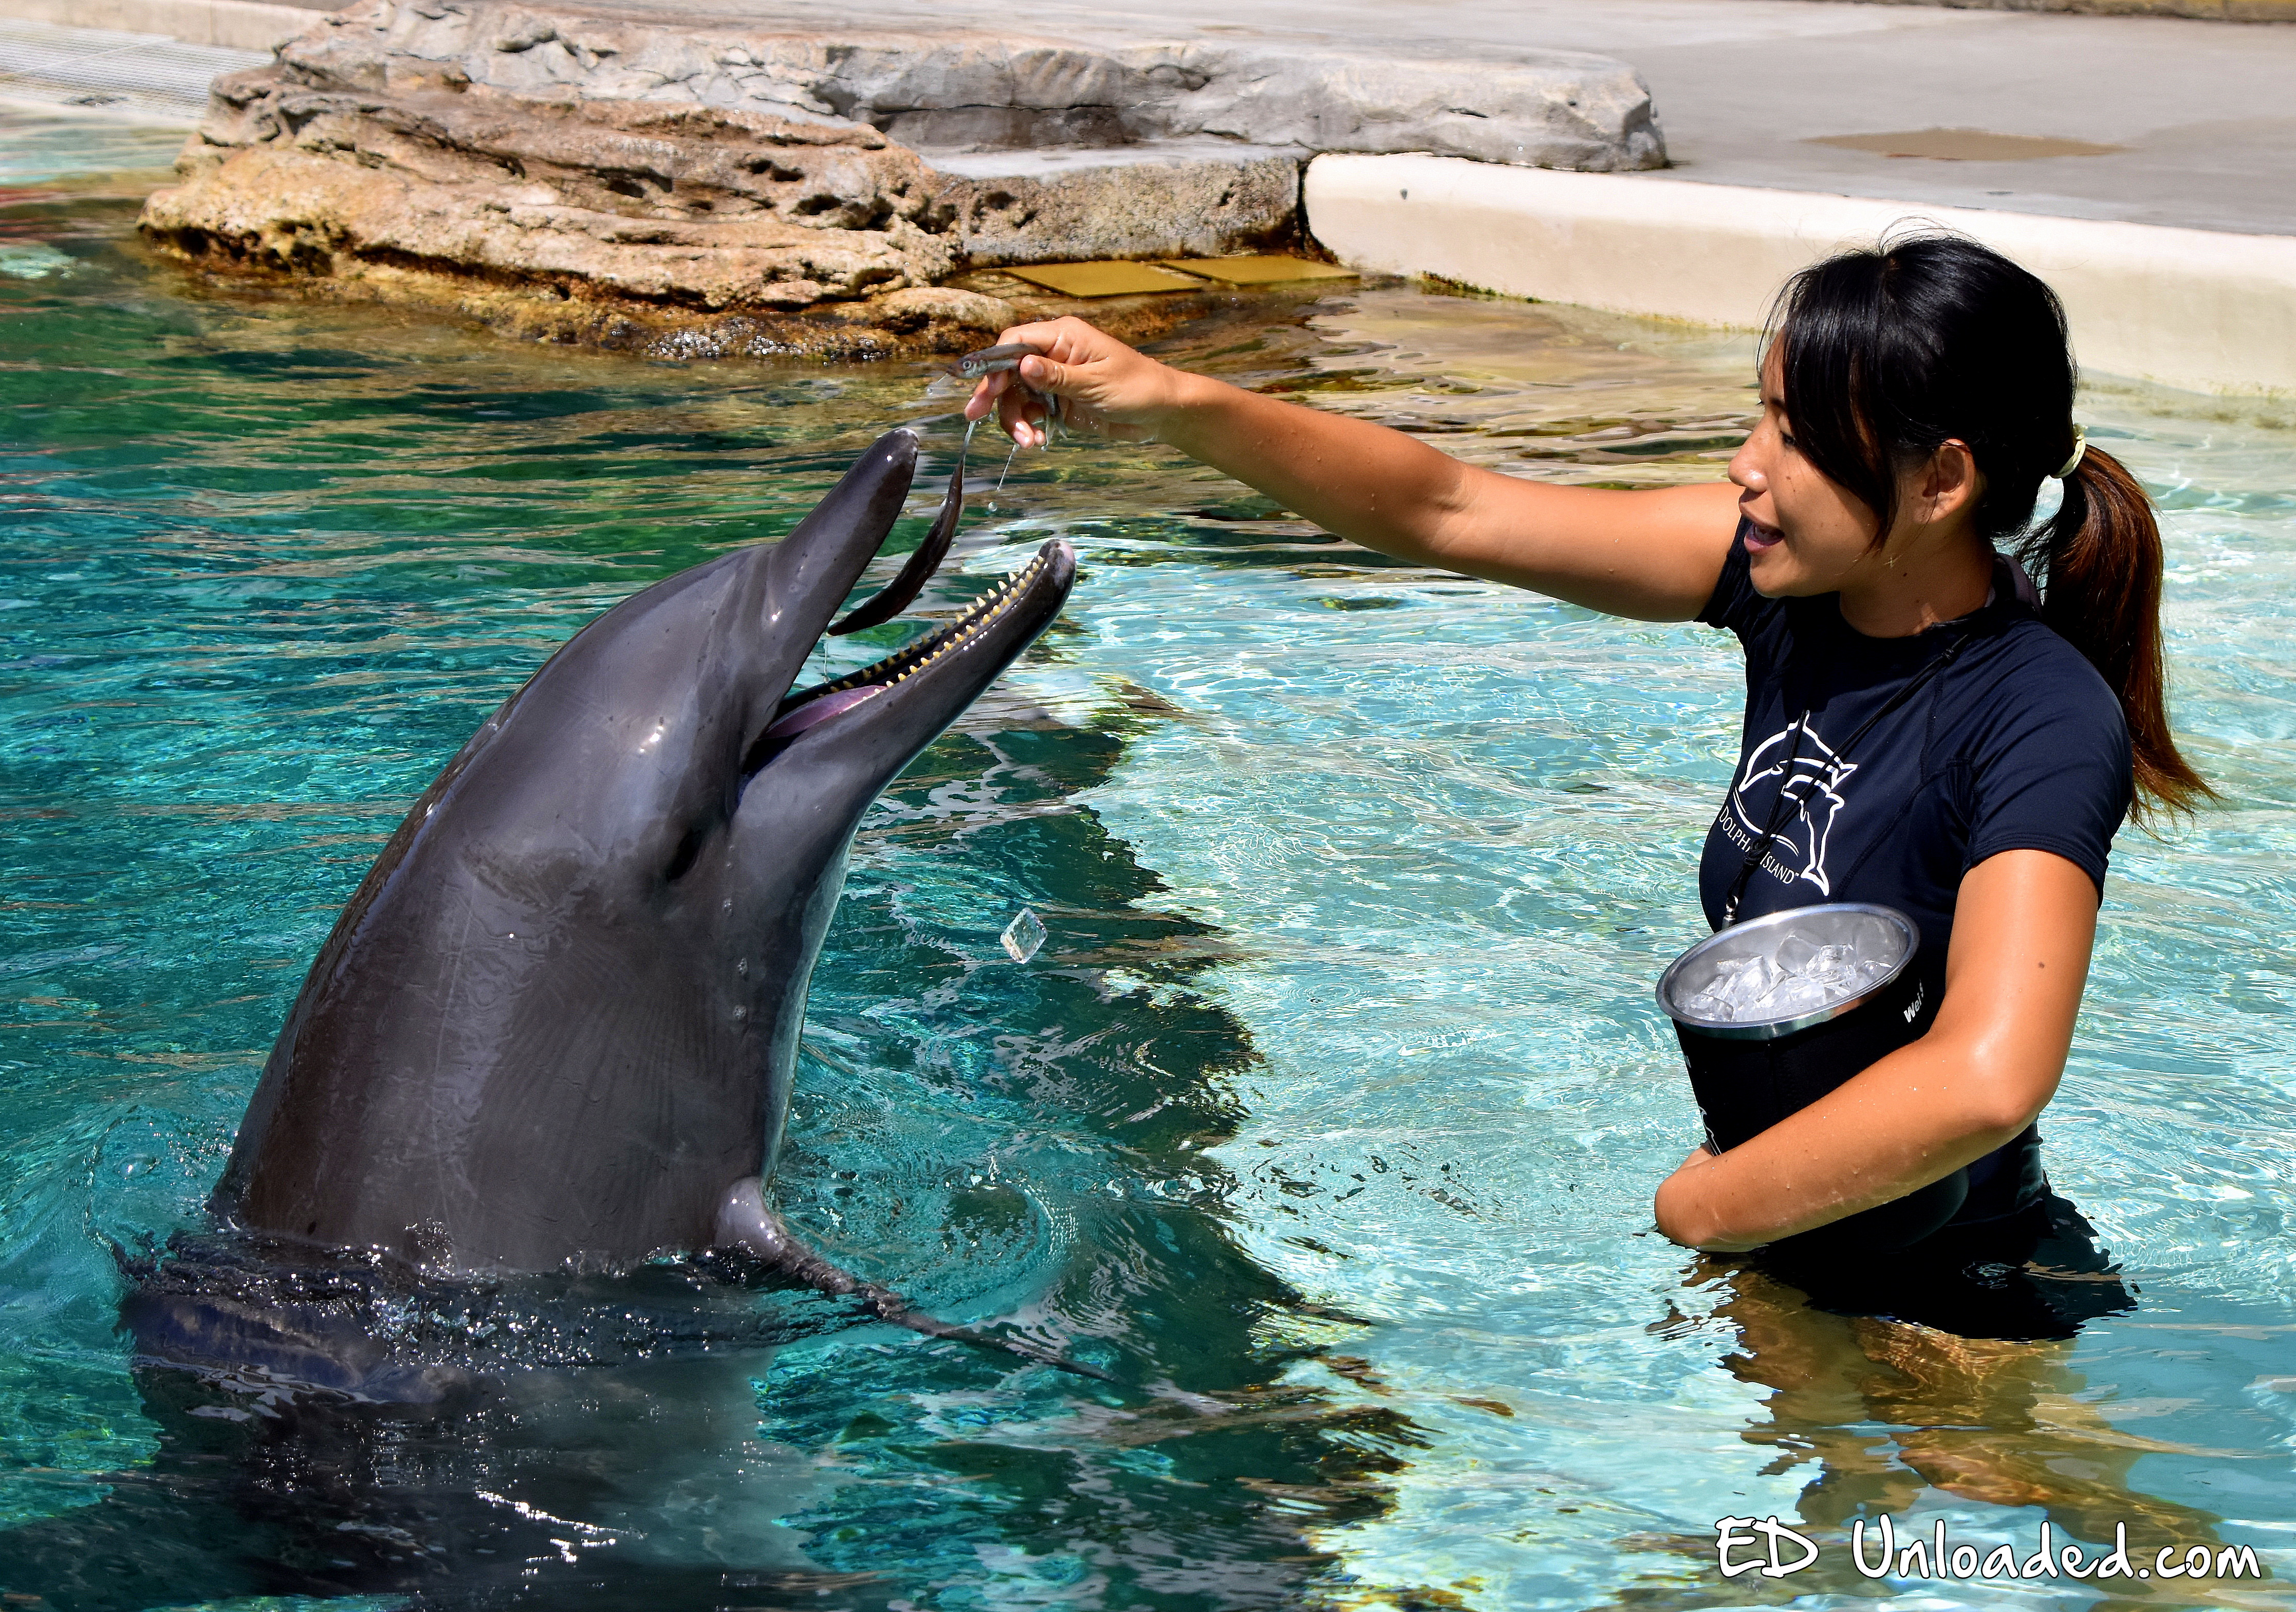 feeding dolphins - Ed Unloaded.com | Parenting, Lifestyle, Travel Blog